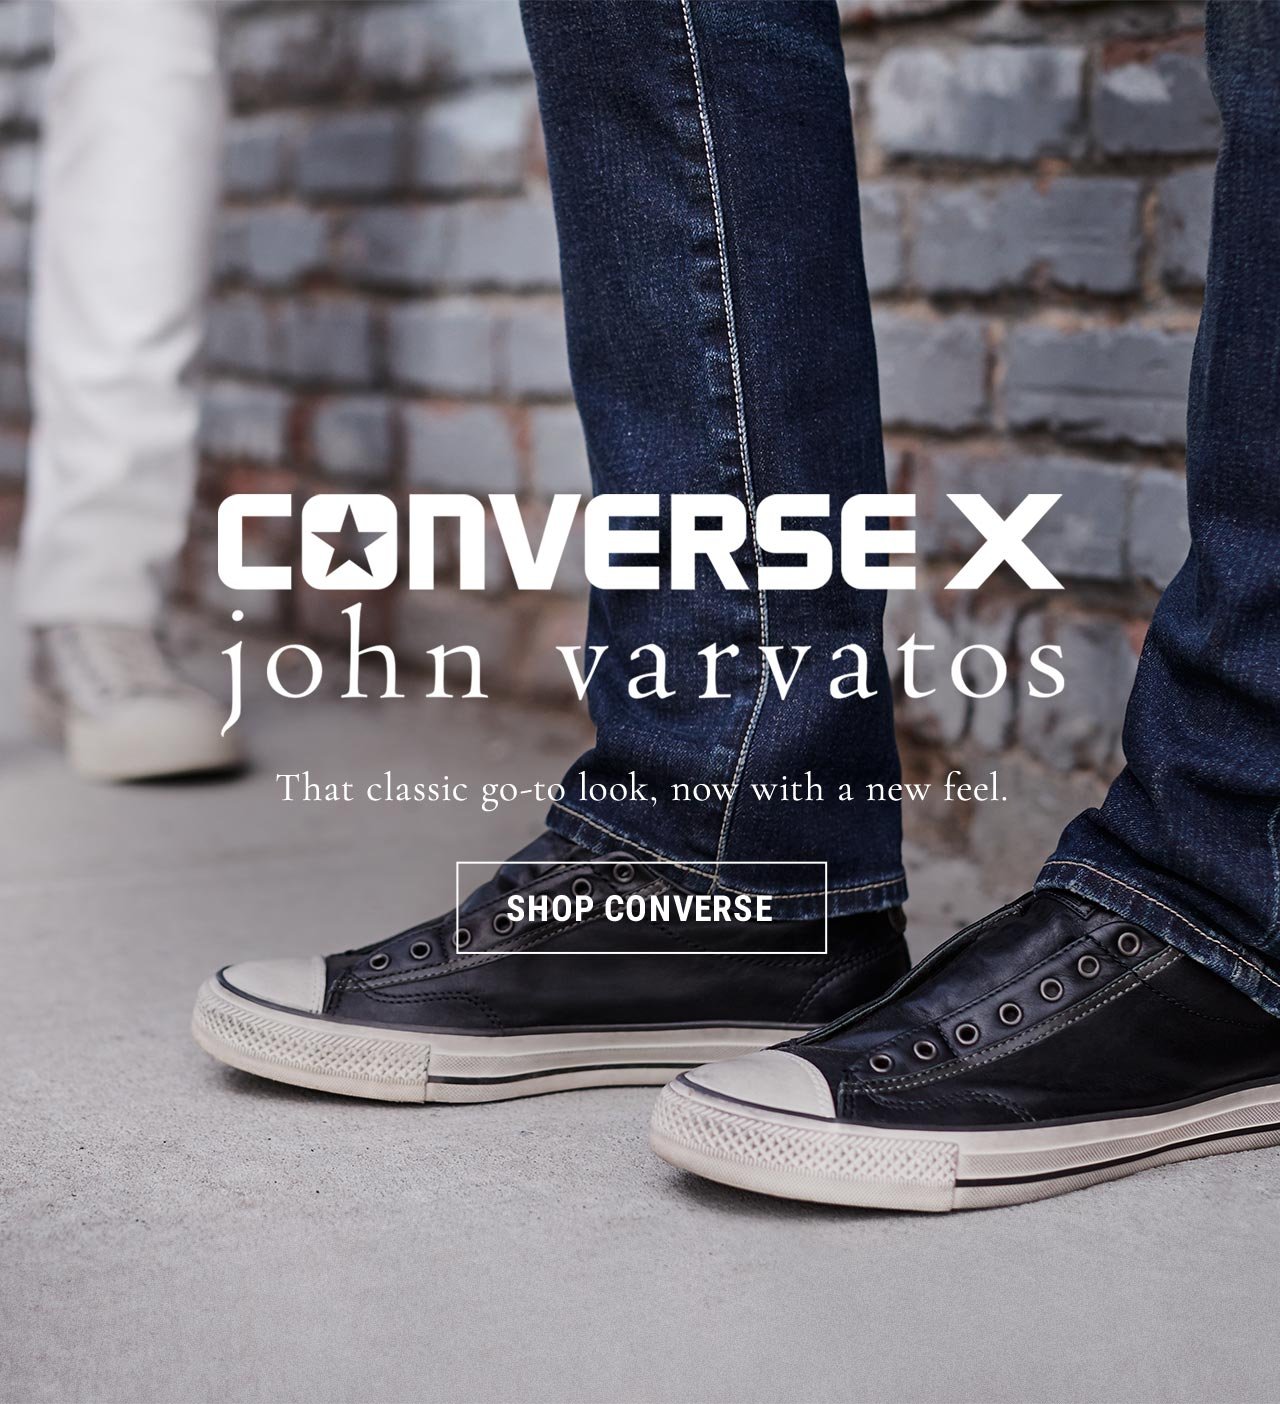 converse john varvatos leather sneakers